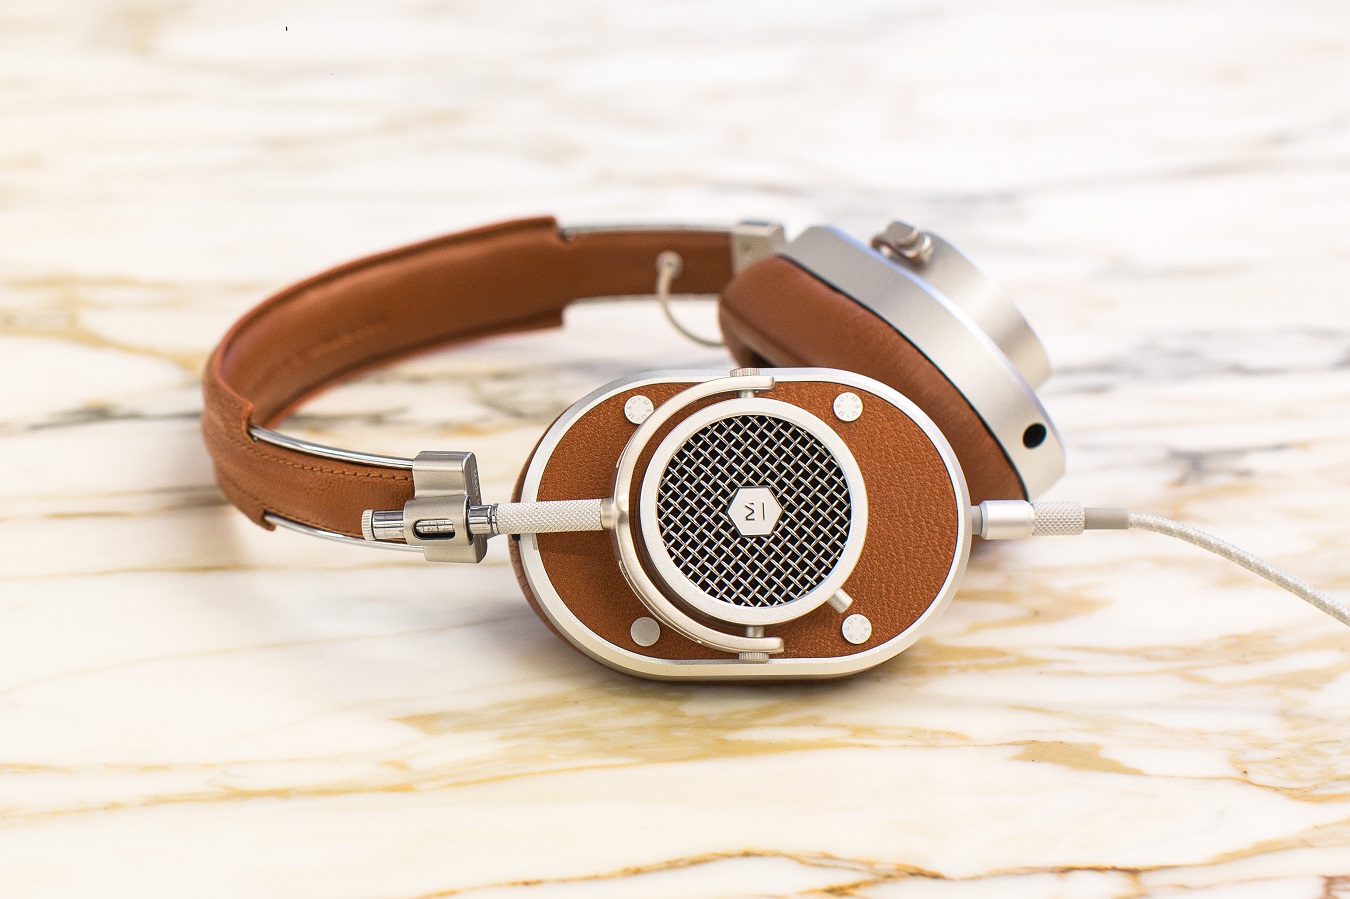 Master & Dynamic’s MH40 Over Ear Headphones